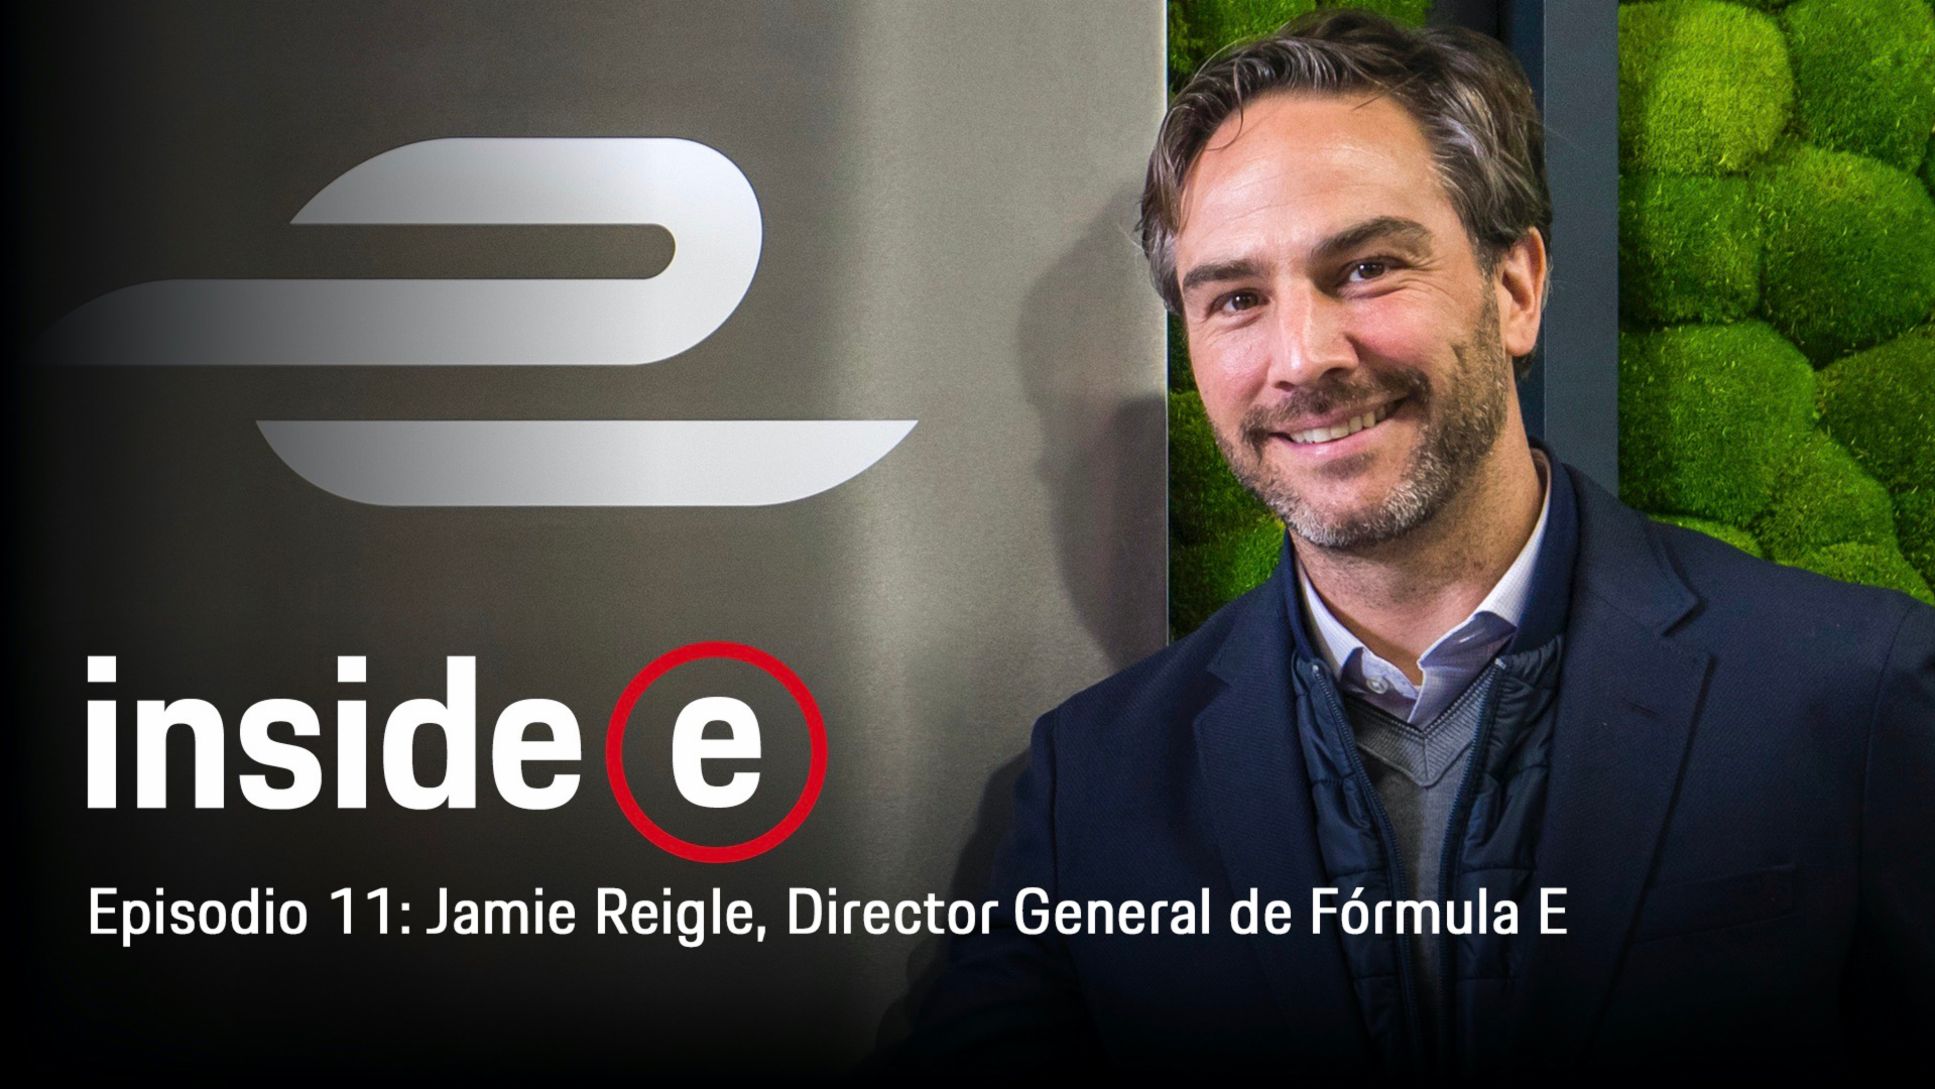  Podcast “Inside E”, episodio 11 con Jamie Reigle, Director General de Fórmula E, 2020, Porsche AG